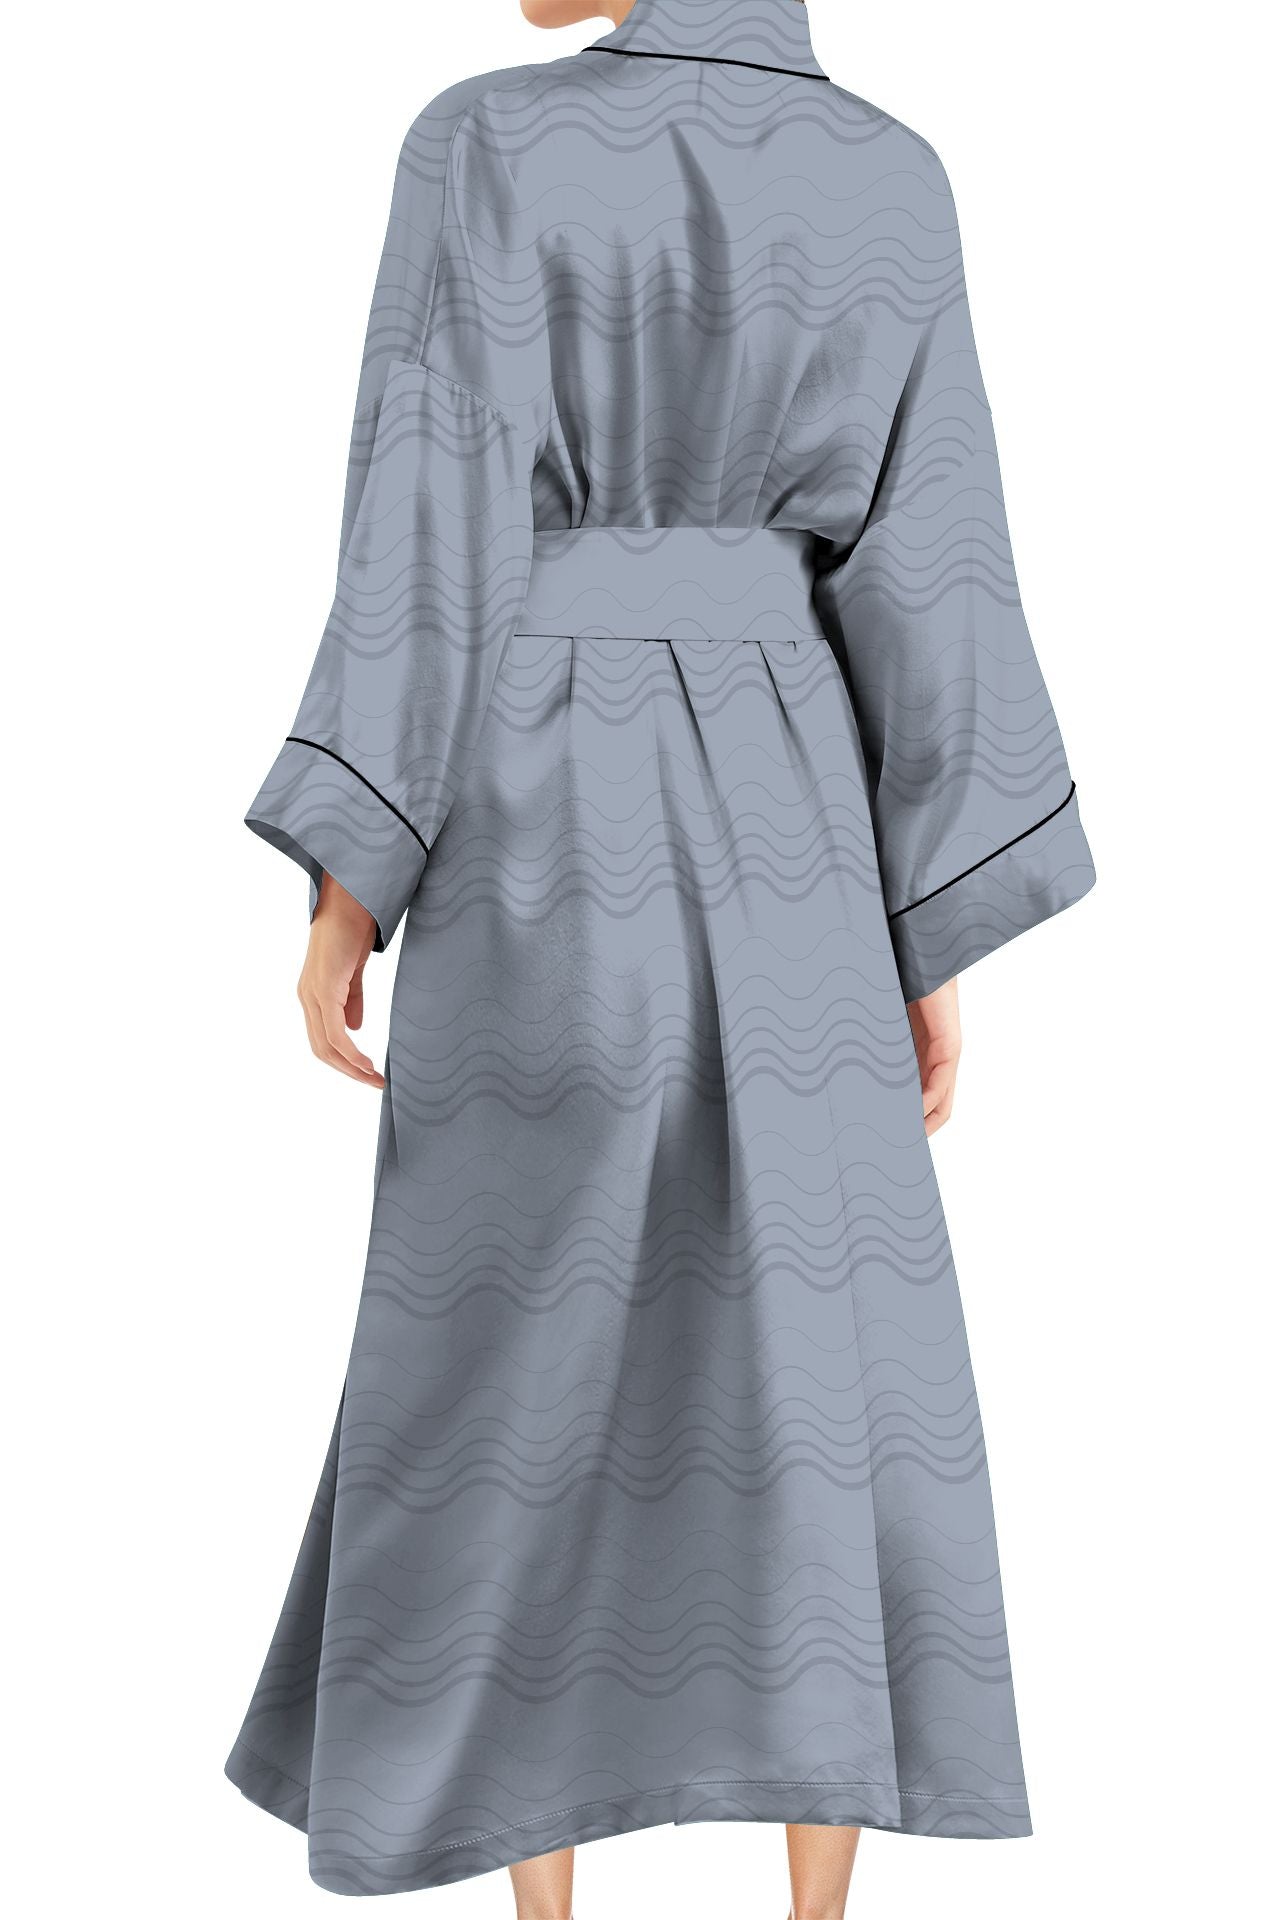 "printed robes womens" "Kyle X Shahida" "printed silk robe" "women's short kimono"